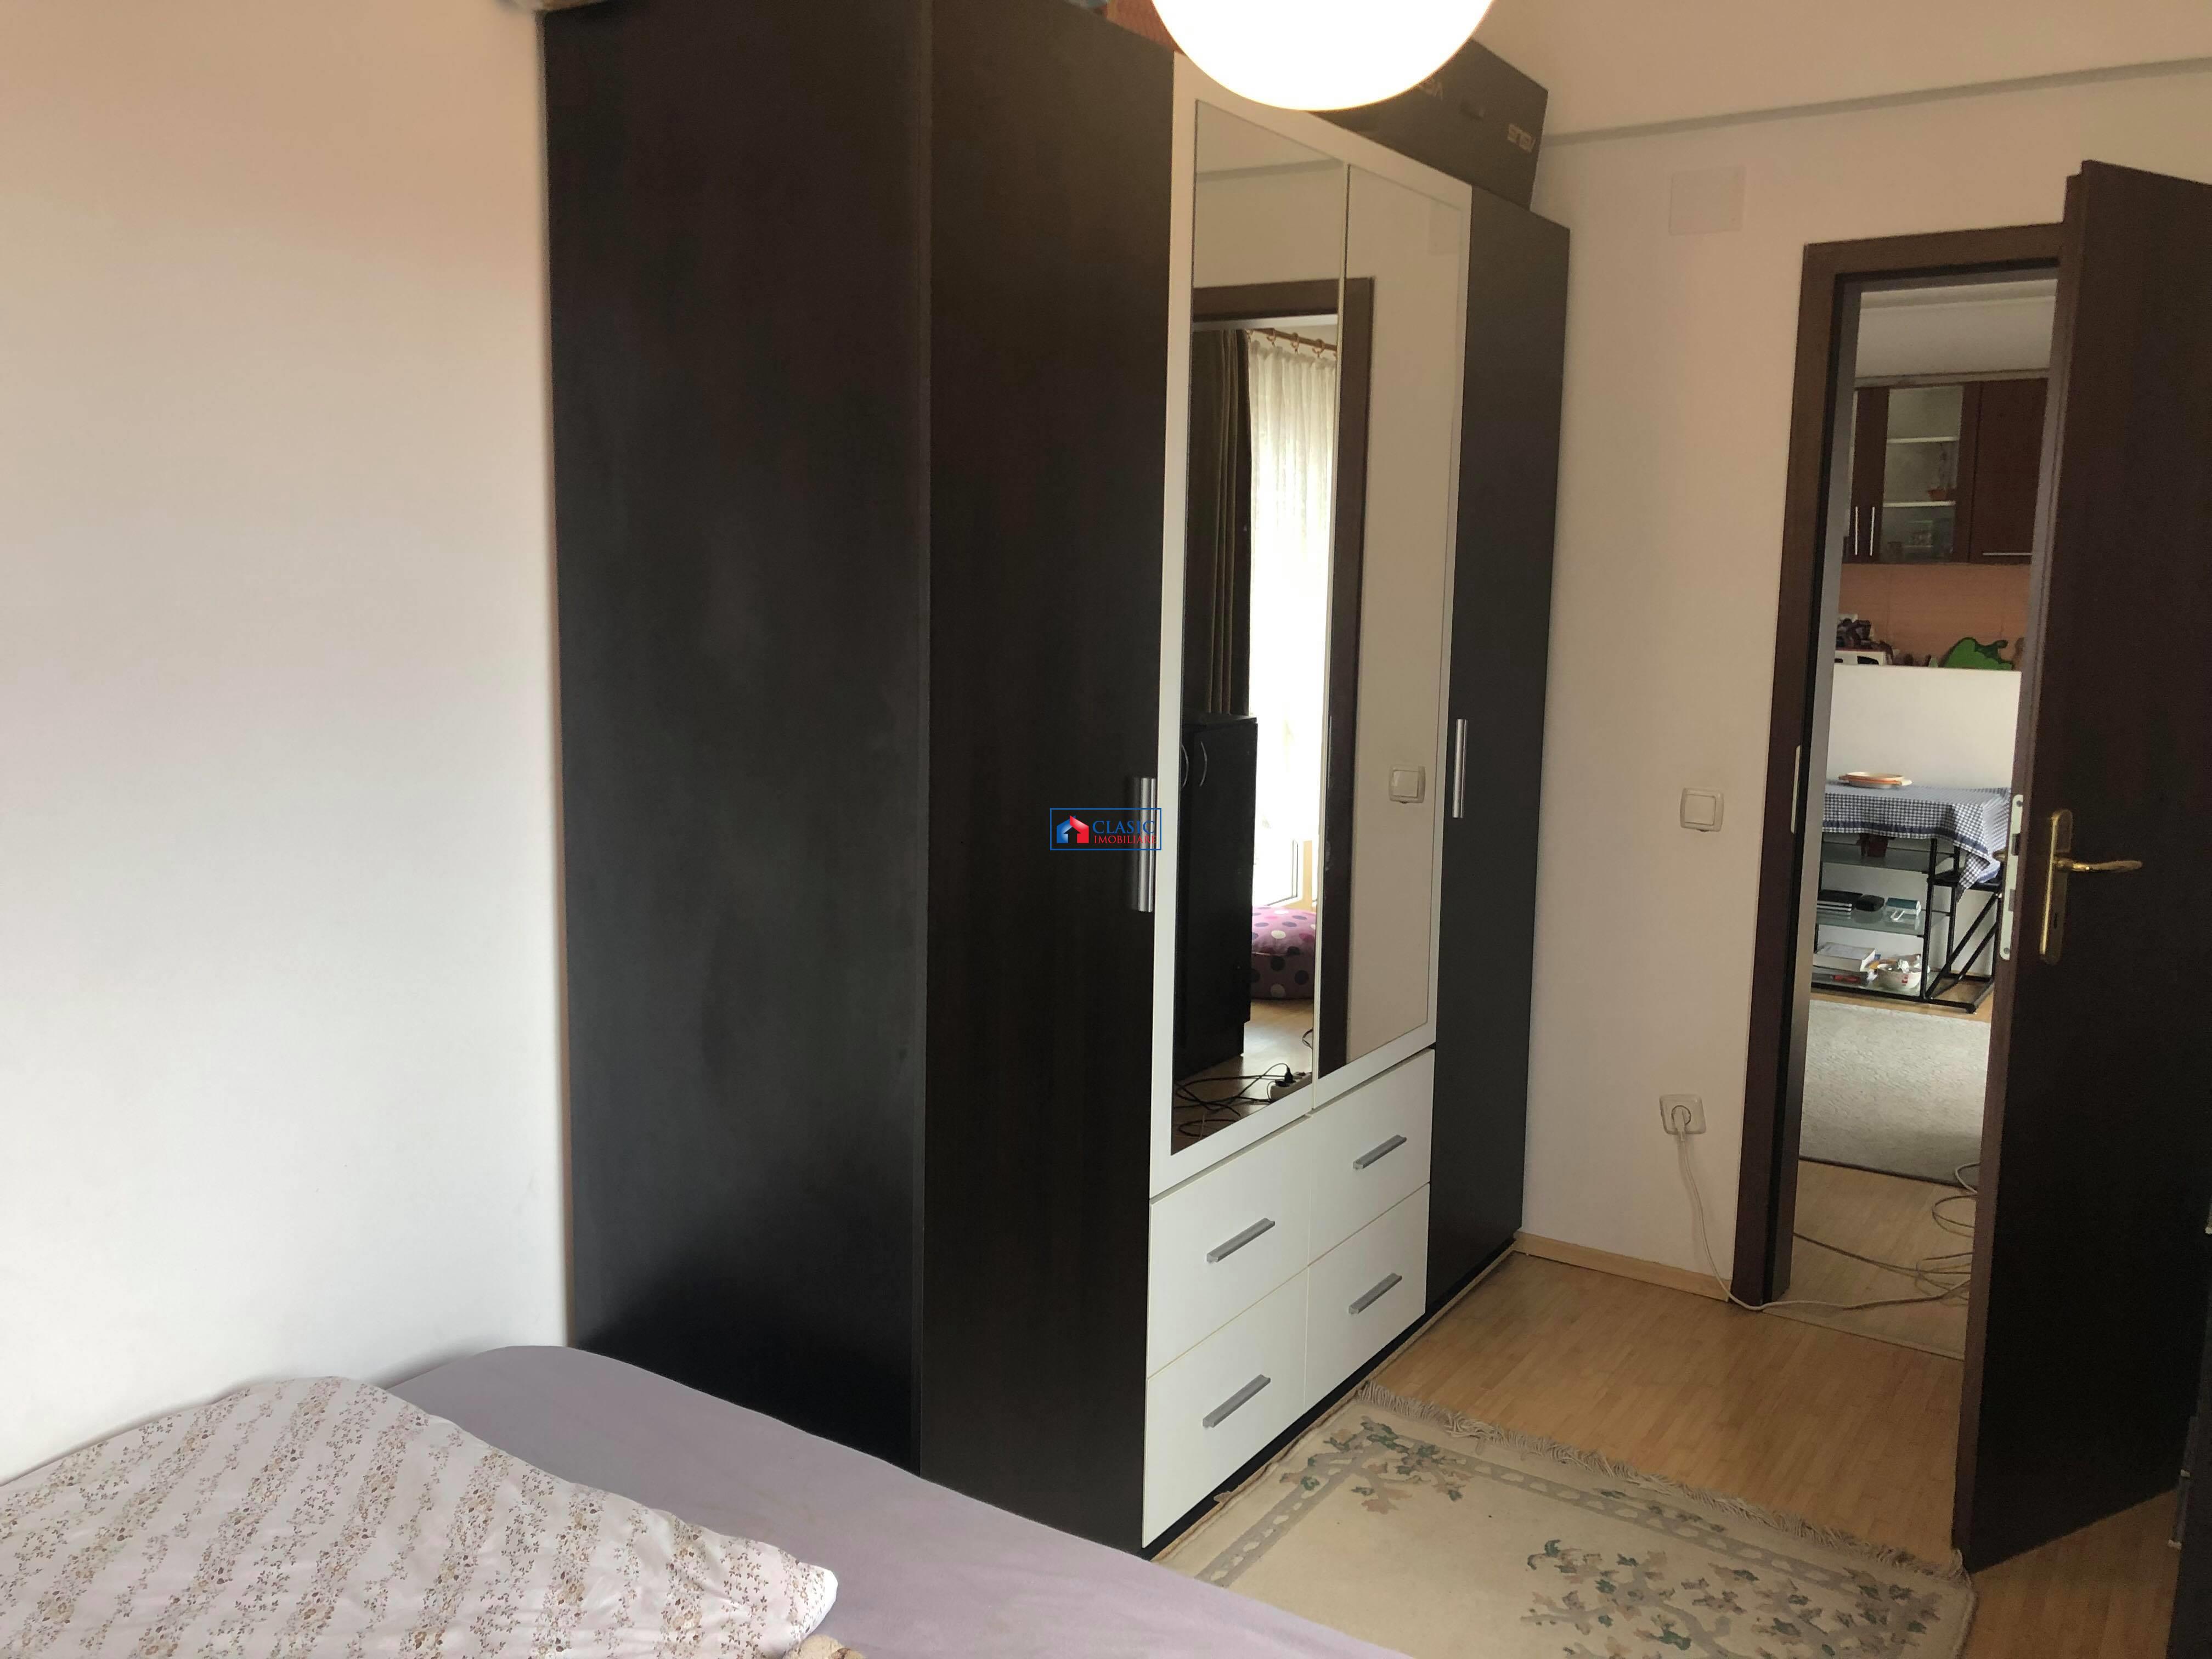 Vanzare apartament 2 camere bloc nou modern zona Zorilor  OMV Turzii